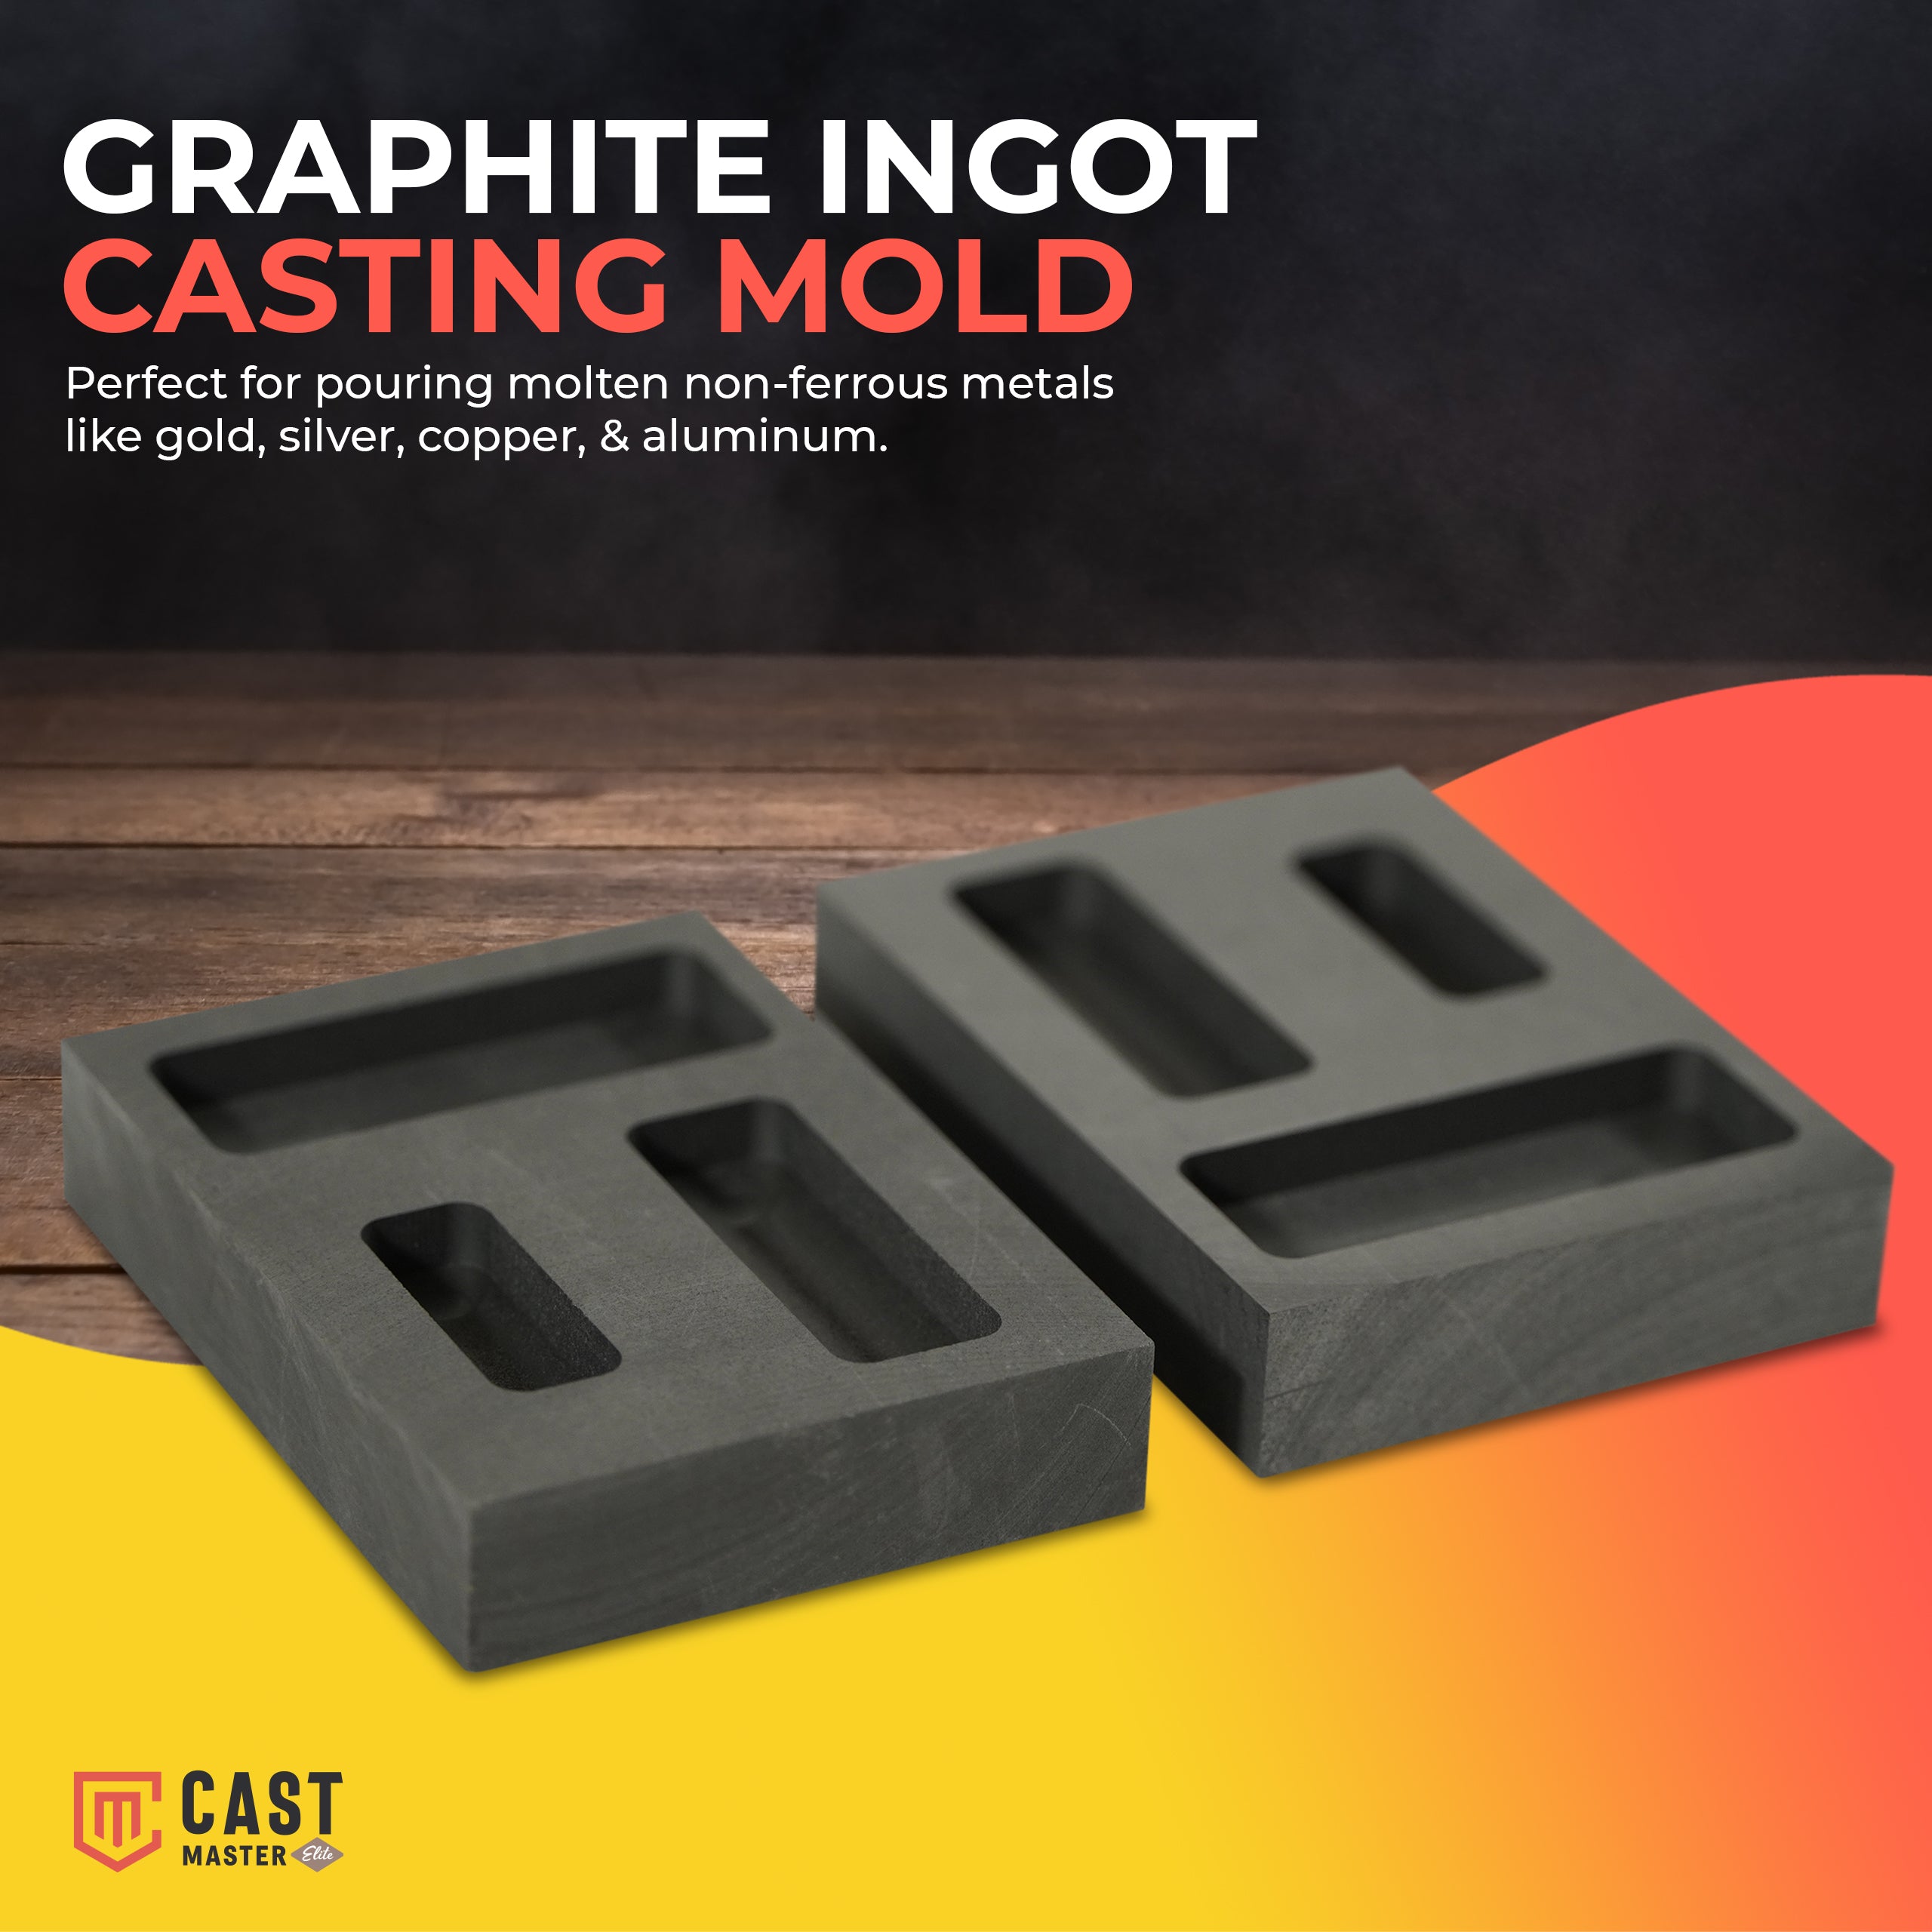 Mini Ingot for GG Mini Pro (2 pack)